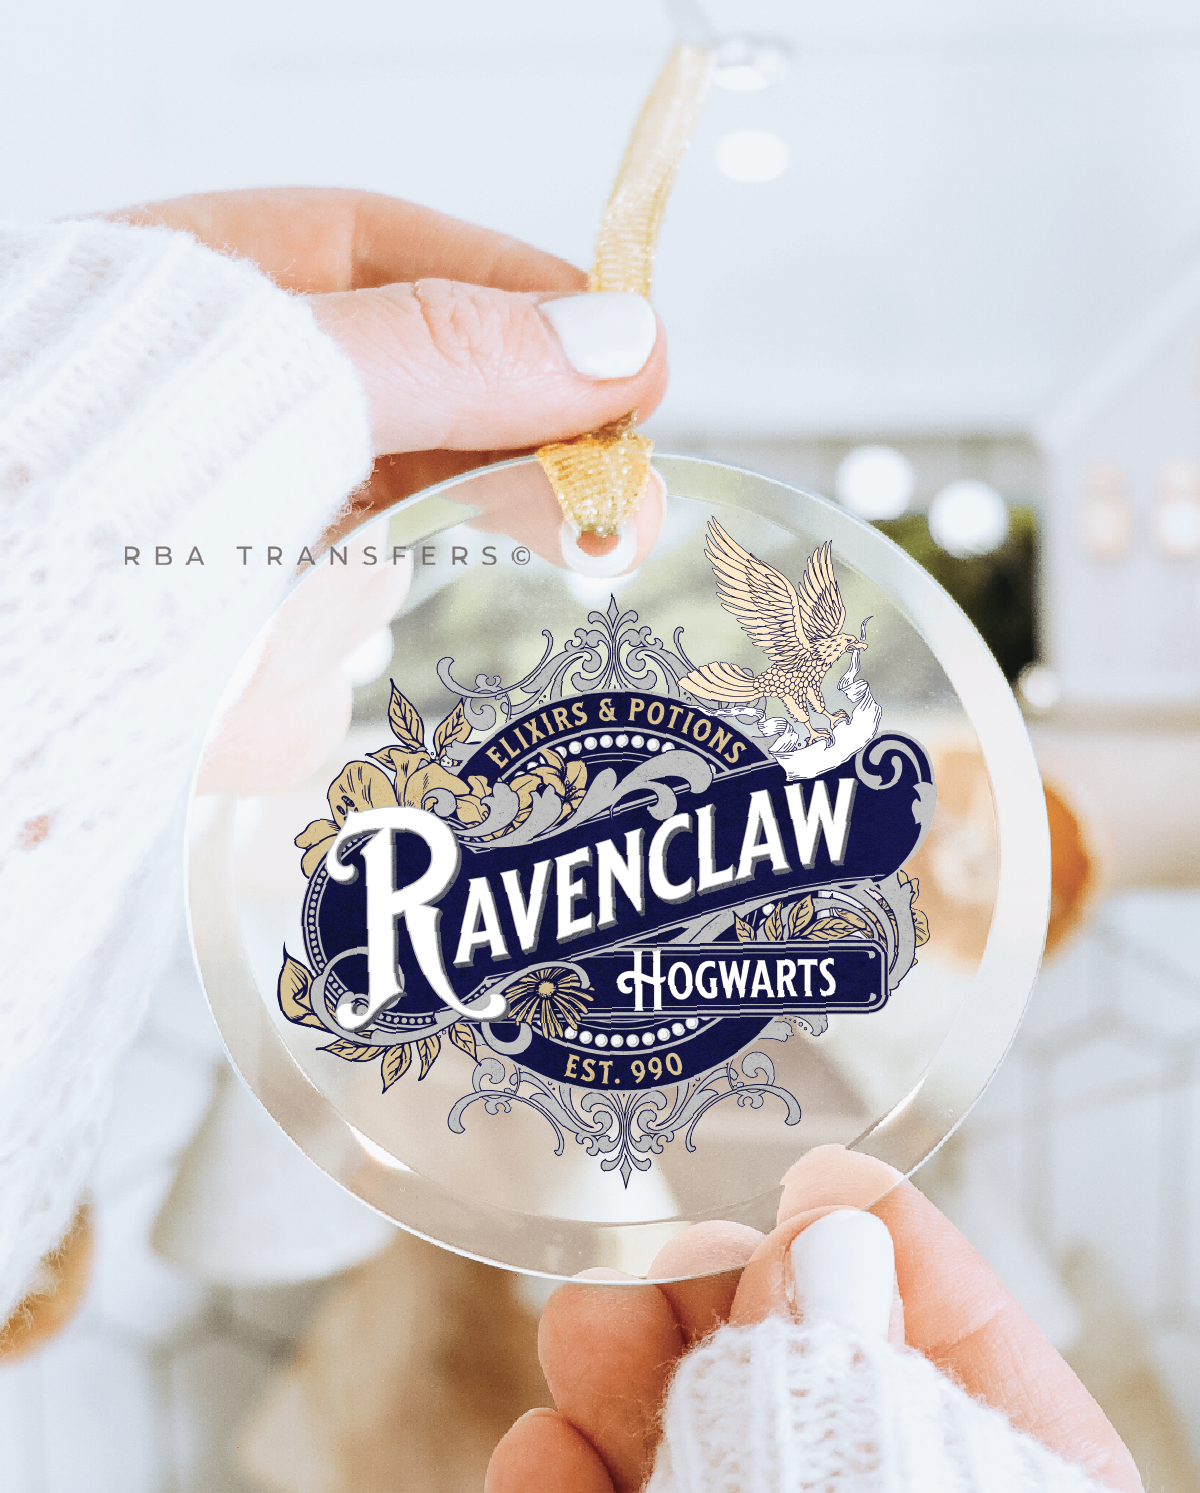 Harry Potter Ravenclaw 3 Fabric Sticker